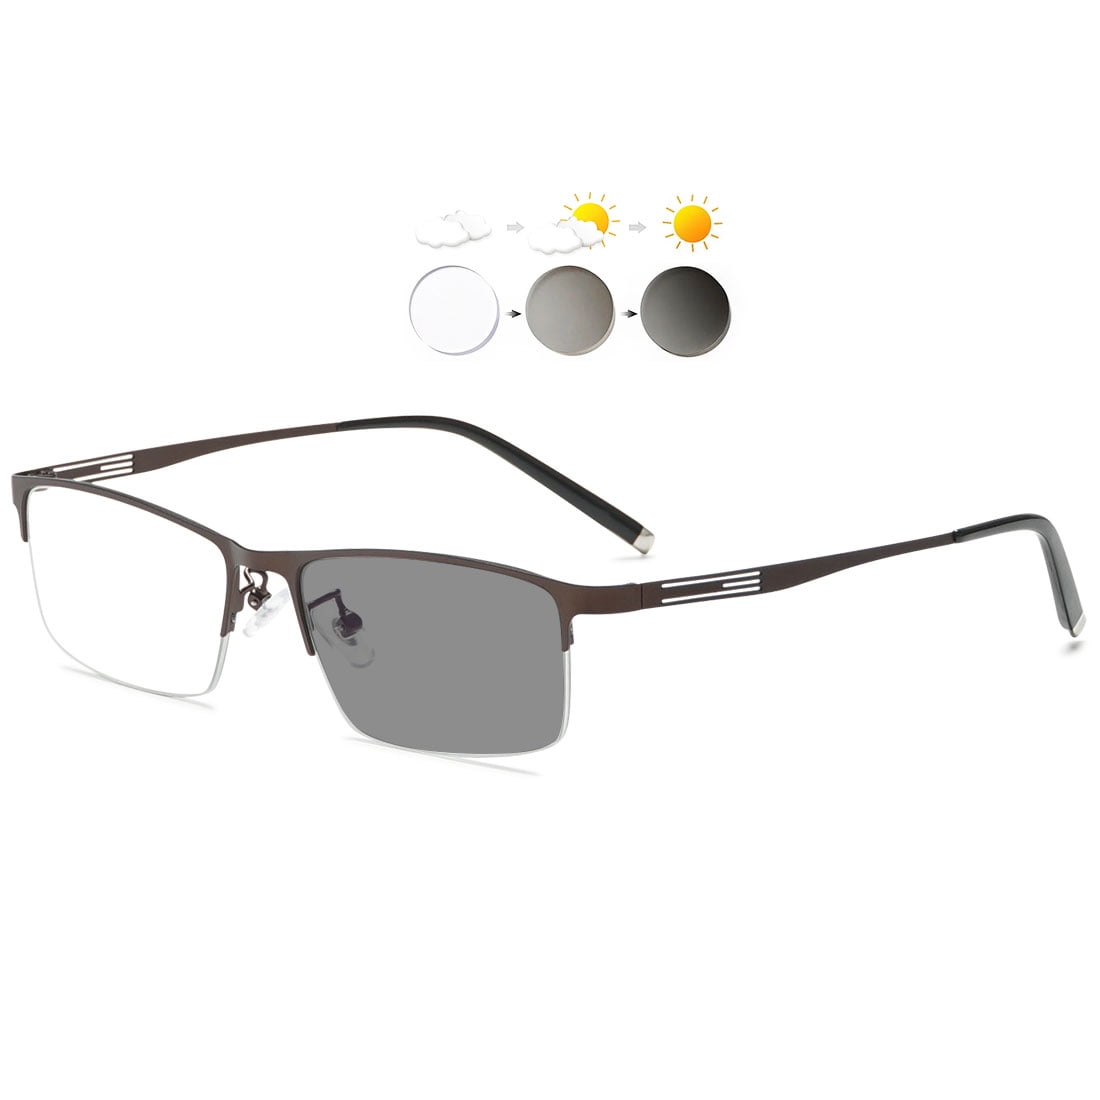 KOOSUFA Mens Photochromic Reading Glasses 2.5 Sun Readers Eyeglasses Semi  Rimless Metal Lightweight UV Protection Sunglasses Eyewear Darken In  Sunlight Grey 